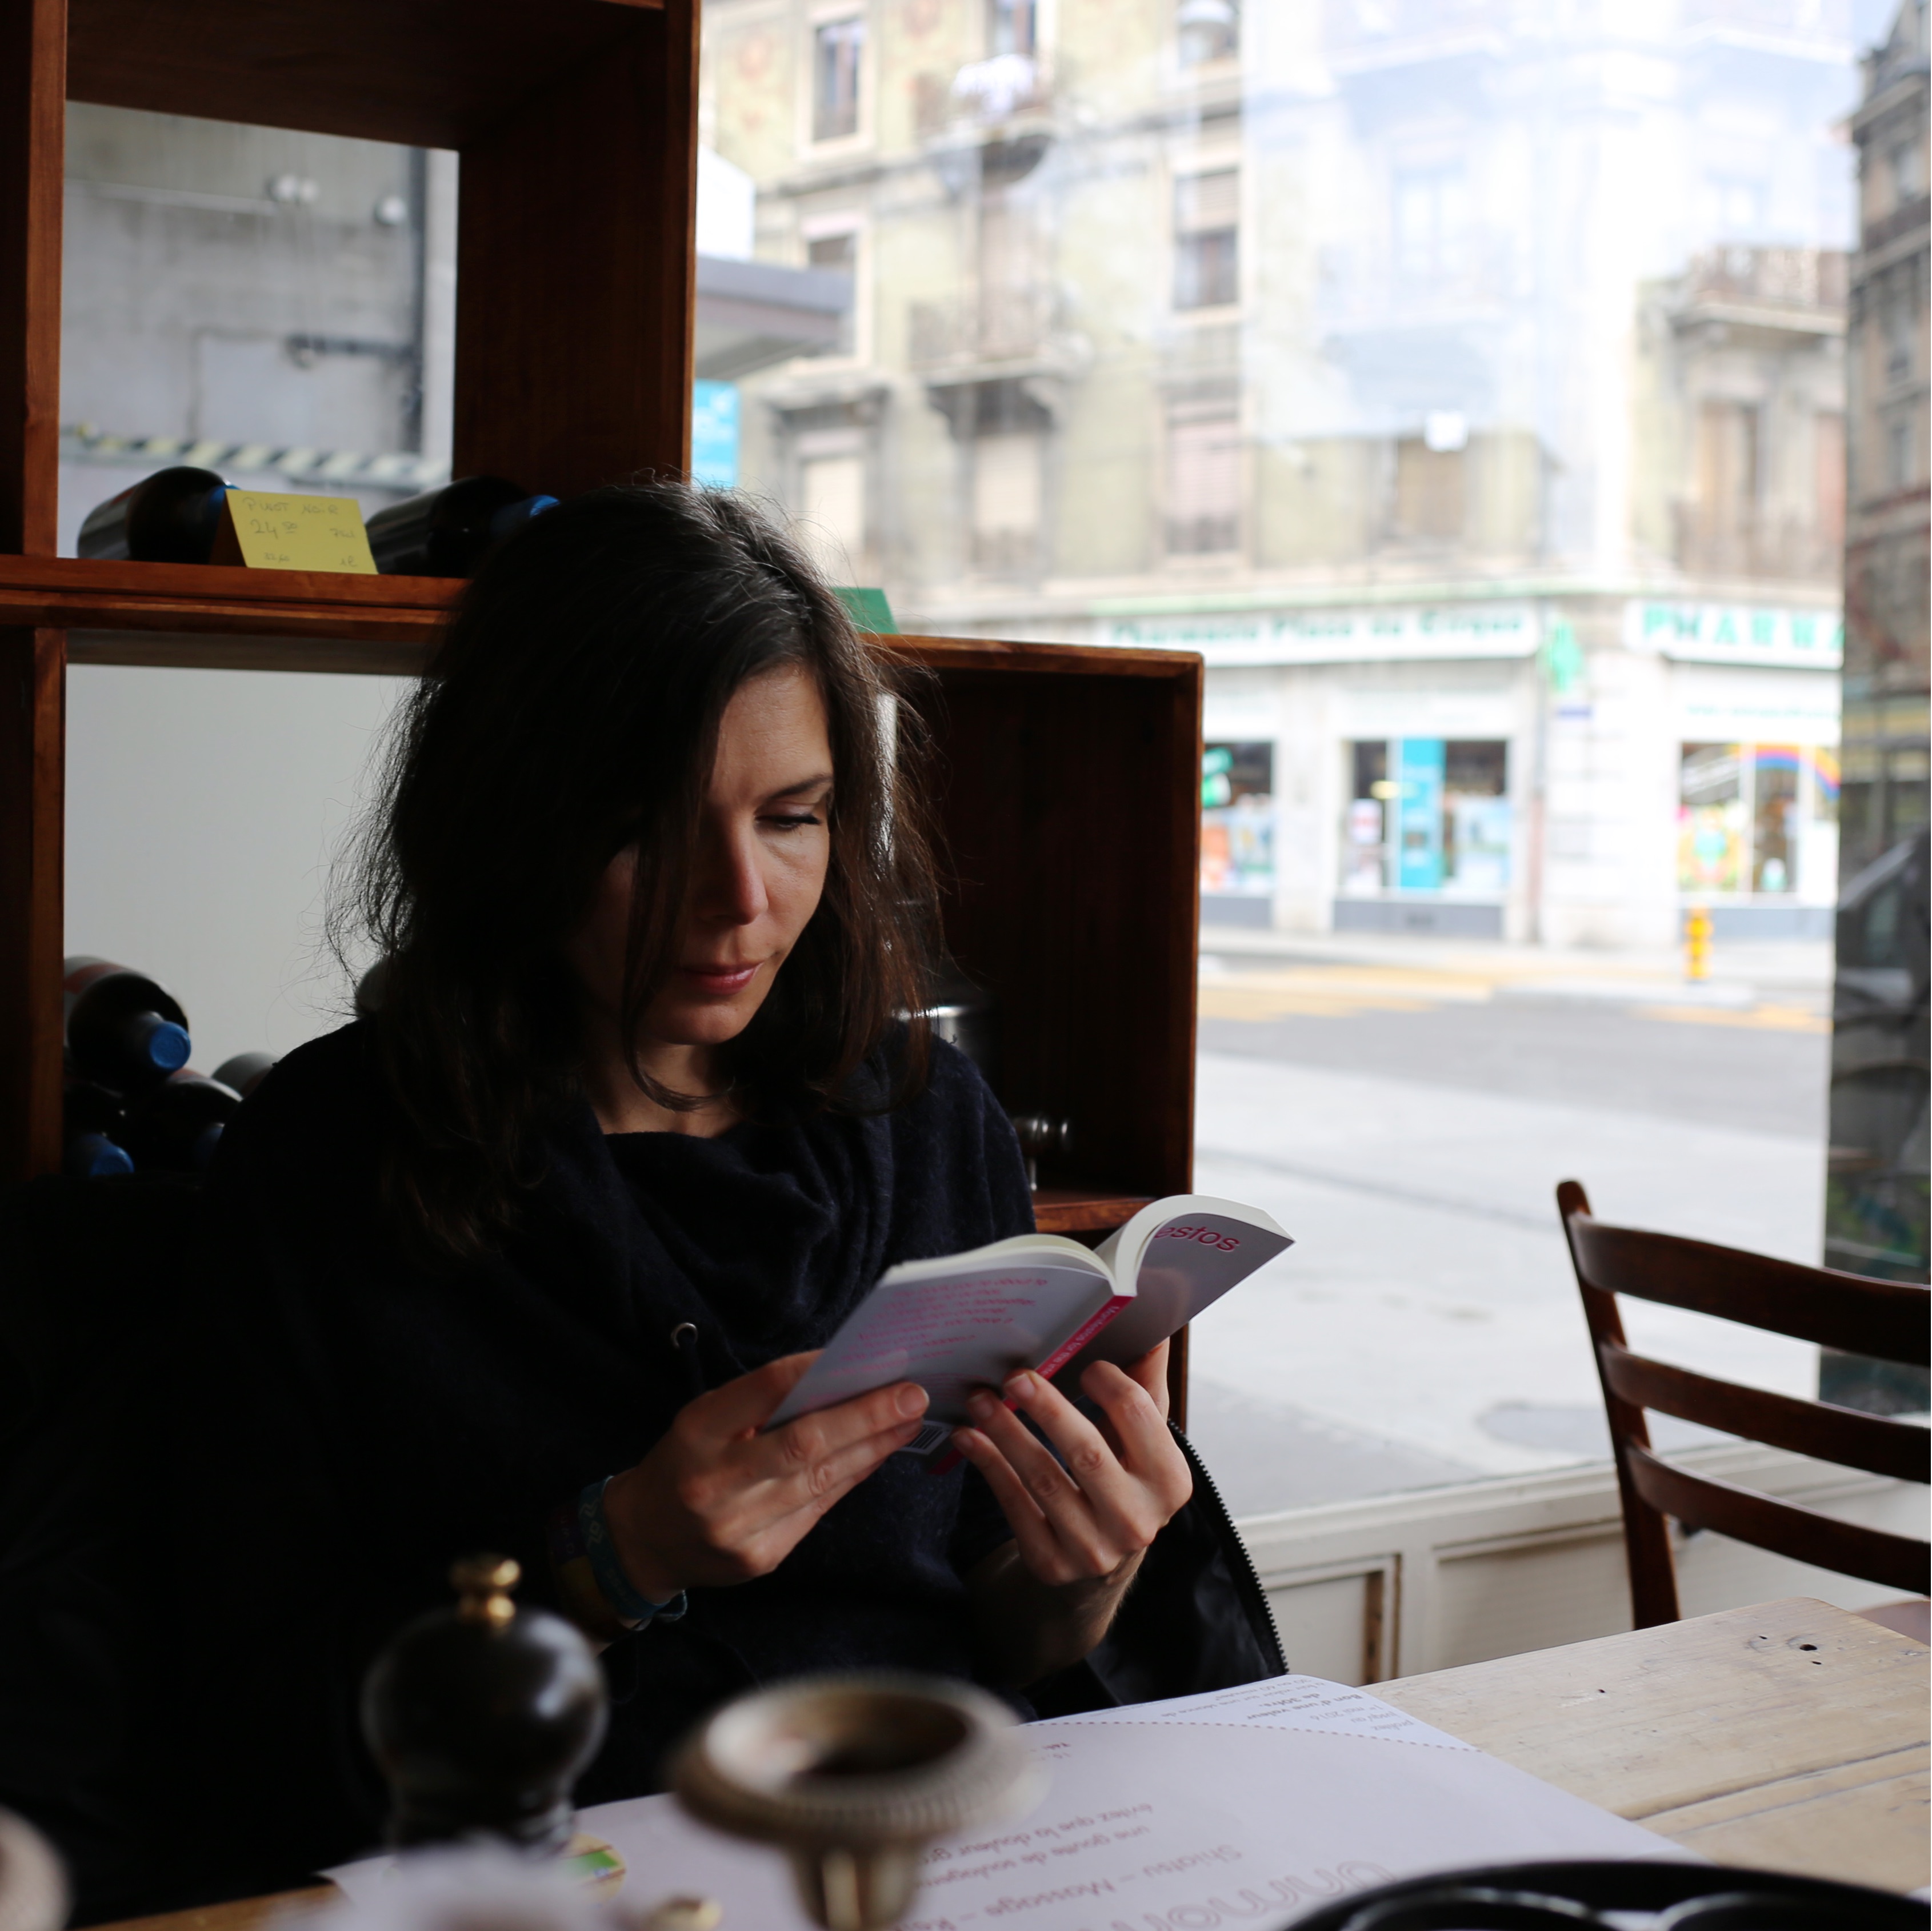 Olia Lialina reading the Manifestos